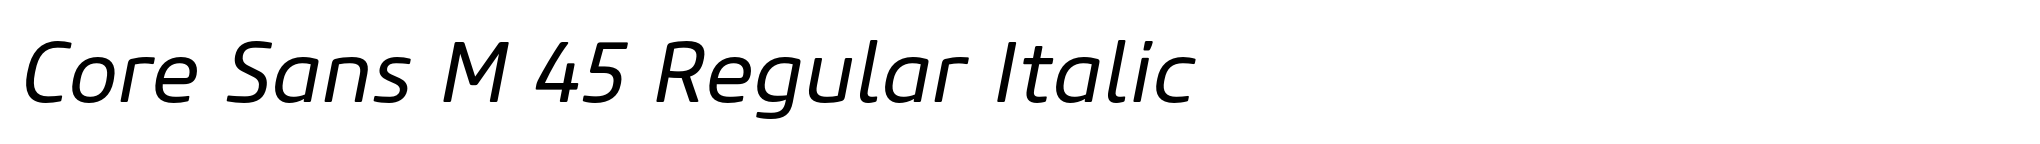 Core Sans M 45 Regular Italic image